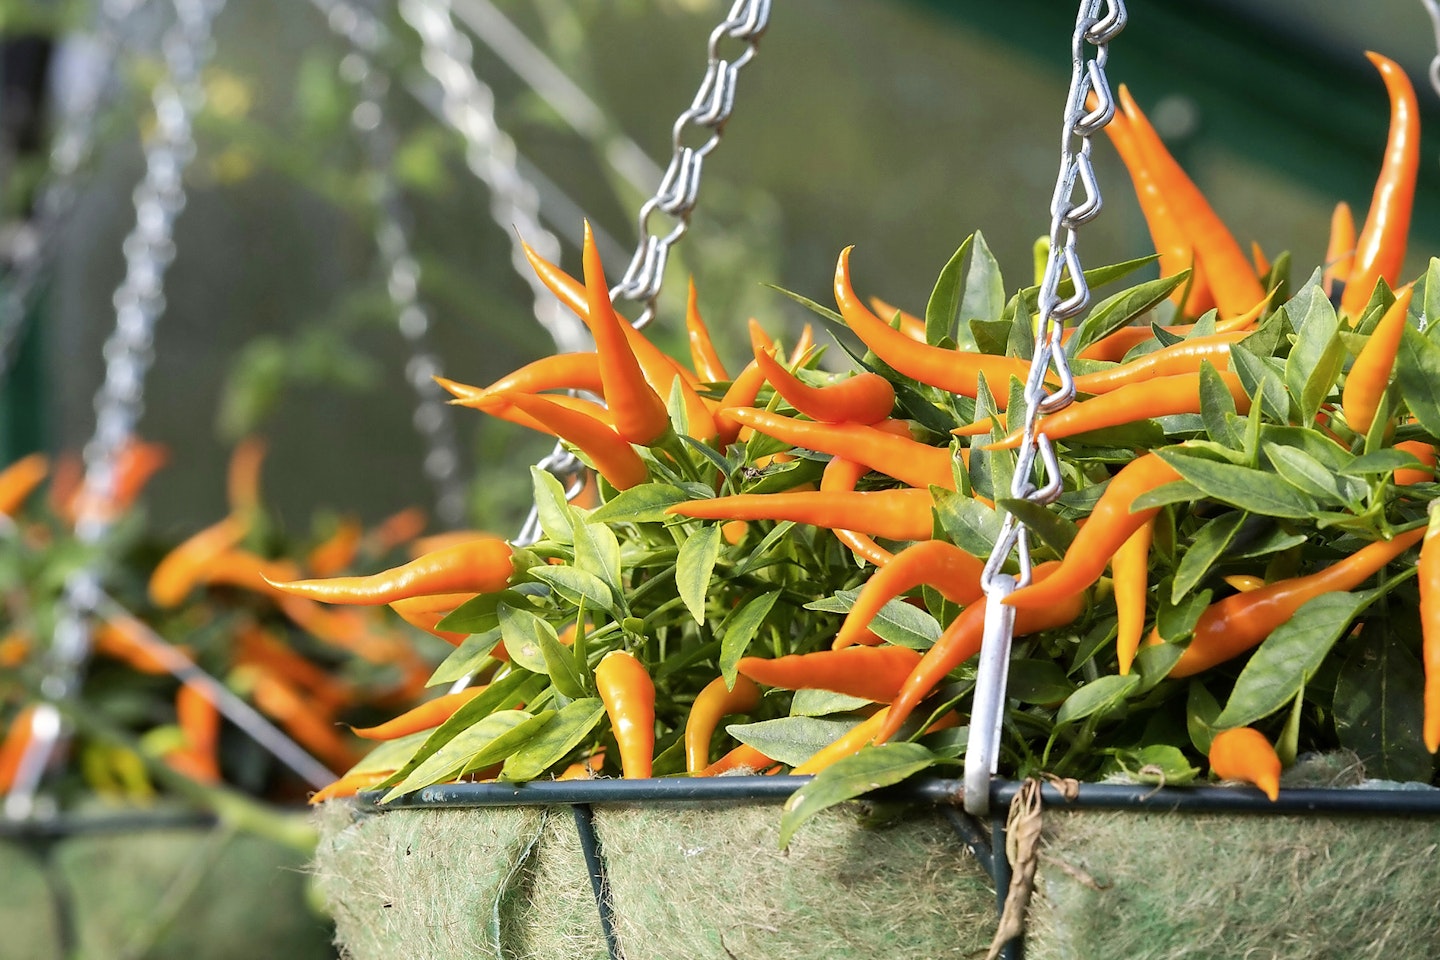 Sweet pepper 'Sweet Sunshine' growing in a hanging basket